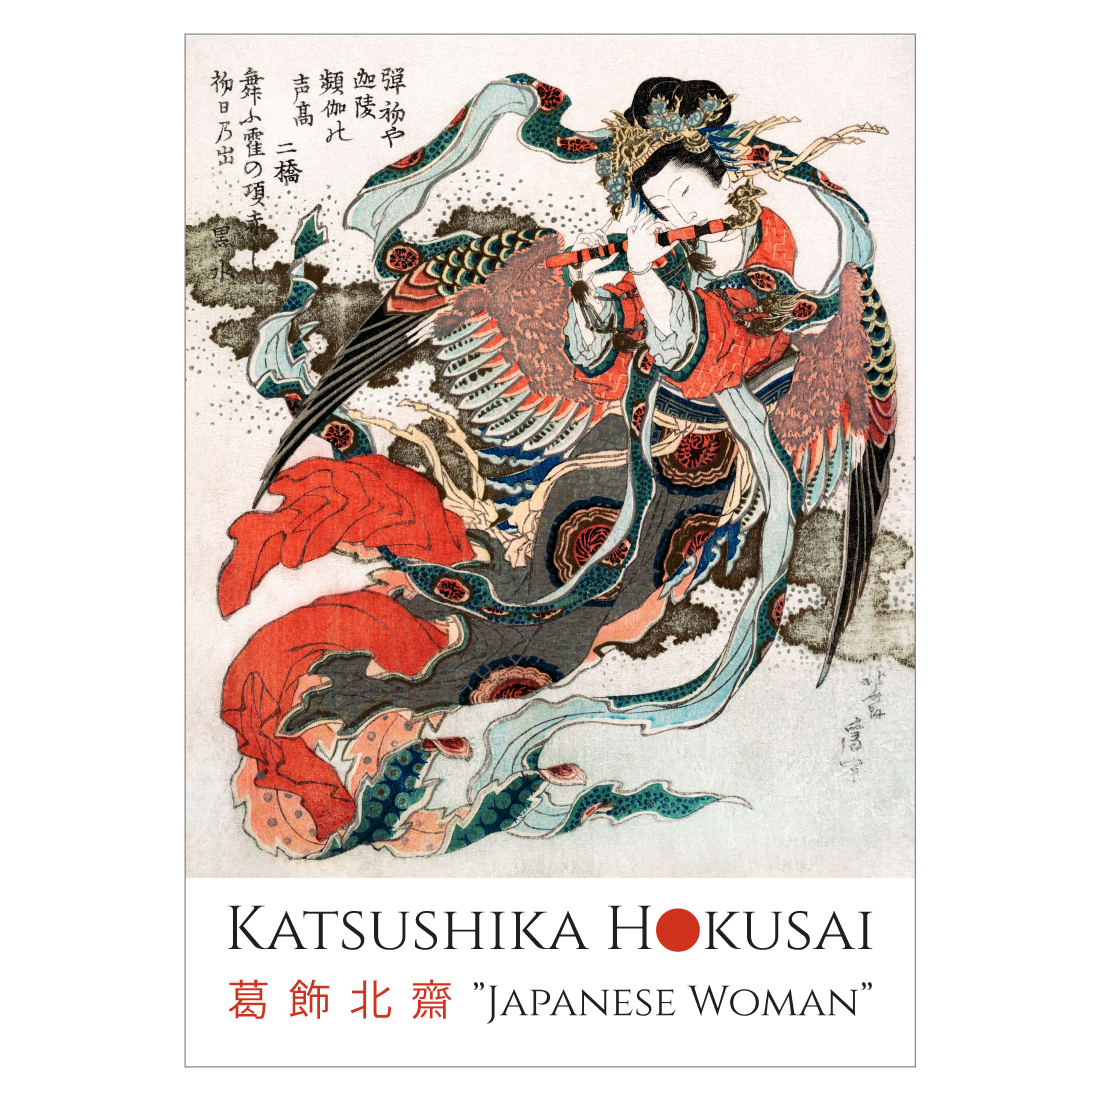 Kunstplakat med Katsushika Hokusai "Japanese Woman"